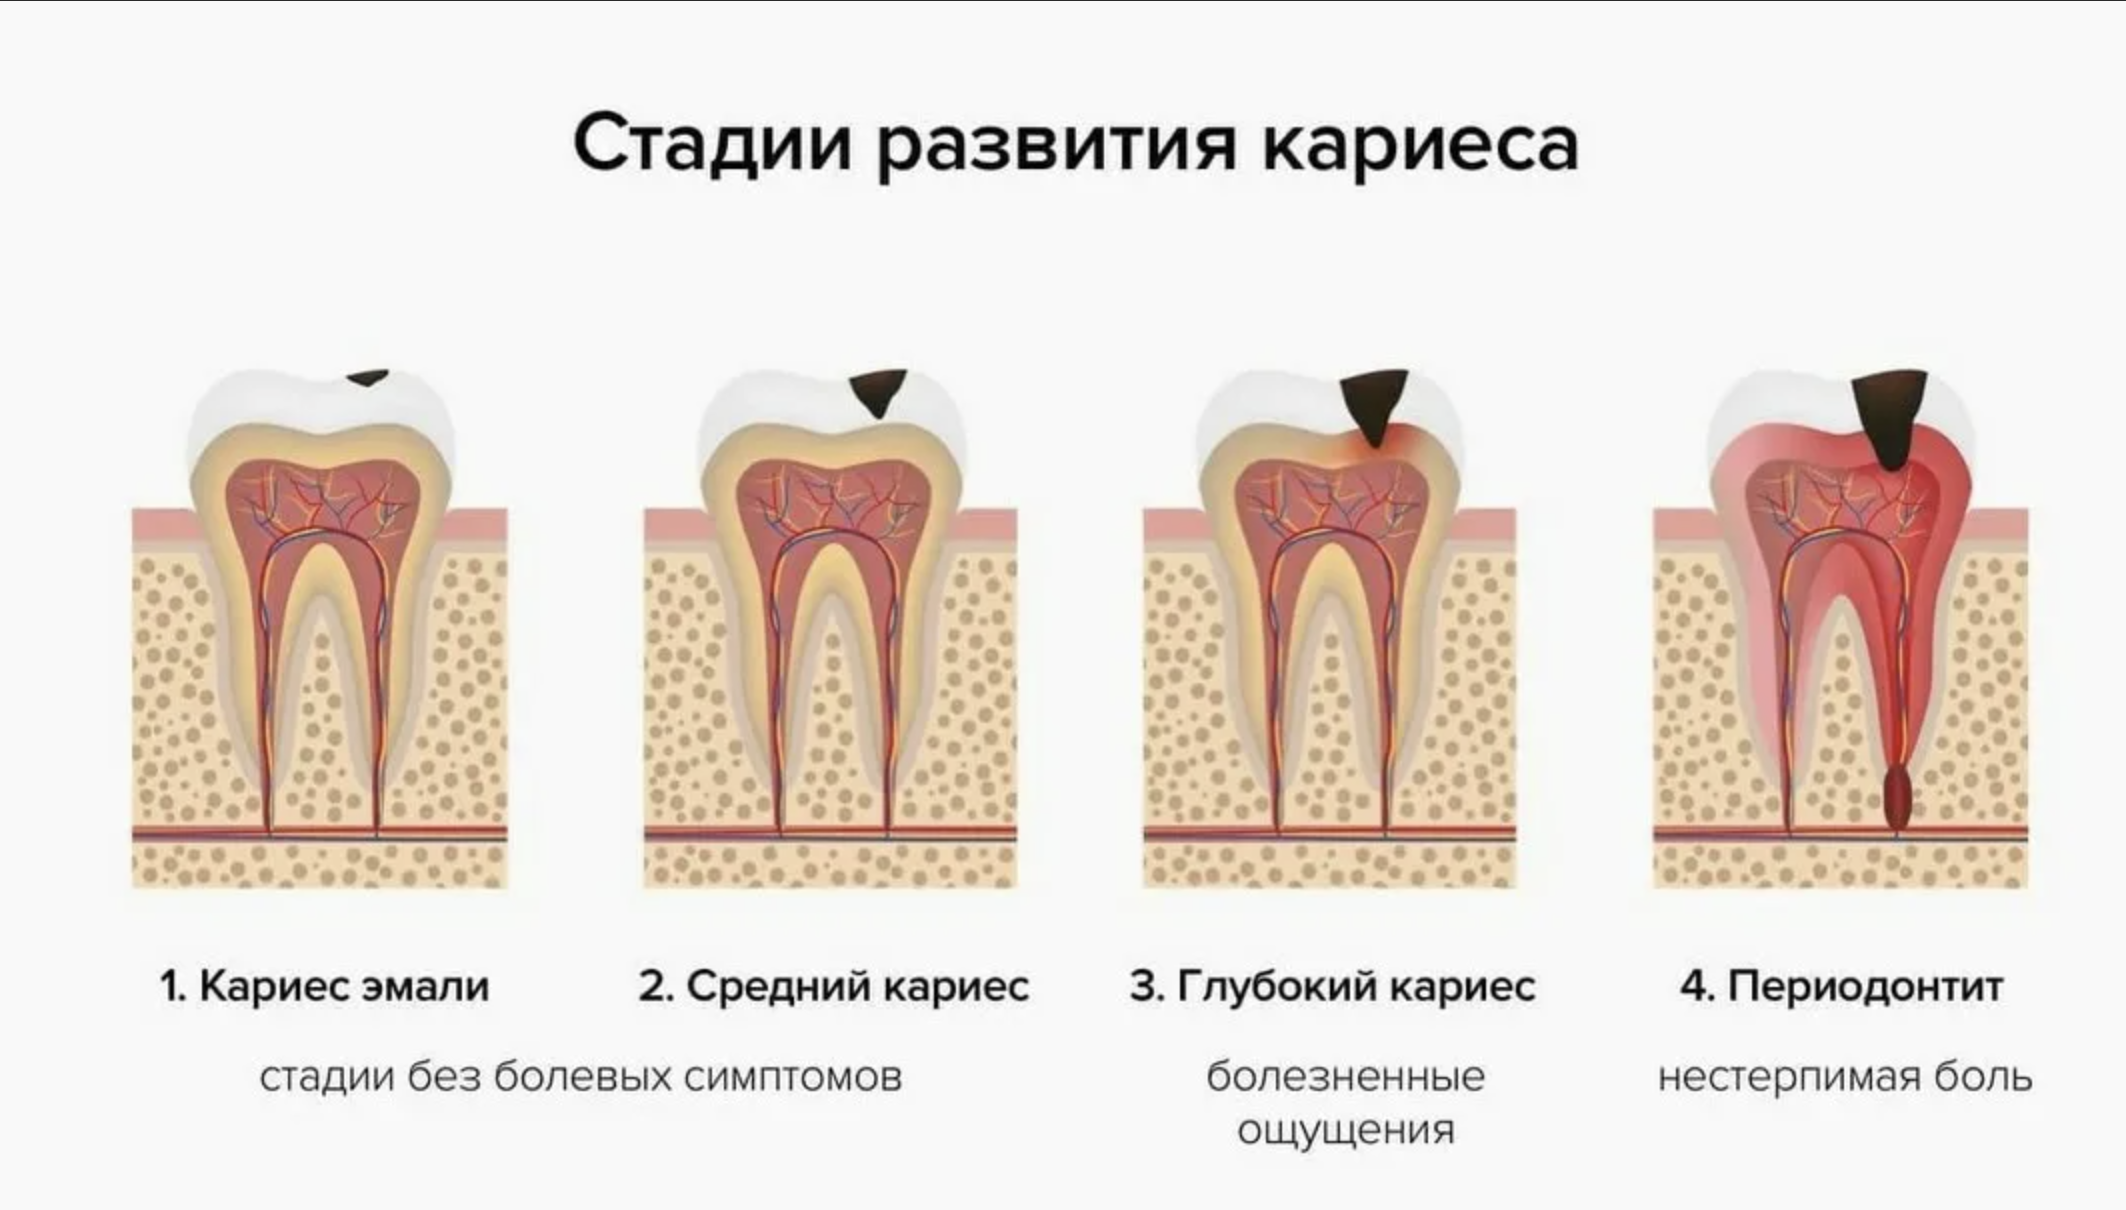 Степени развития кариеса. Кариес дентина глубокий кариес. Схема развития кариеса зубов. Симптомы кариеса стадии развития.